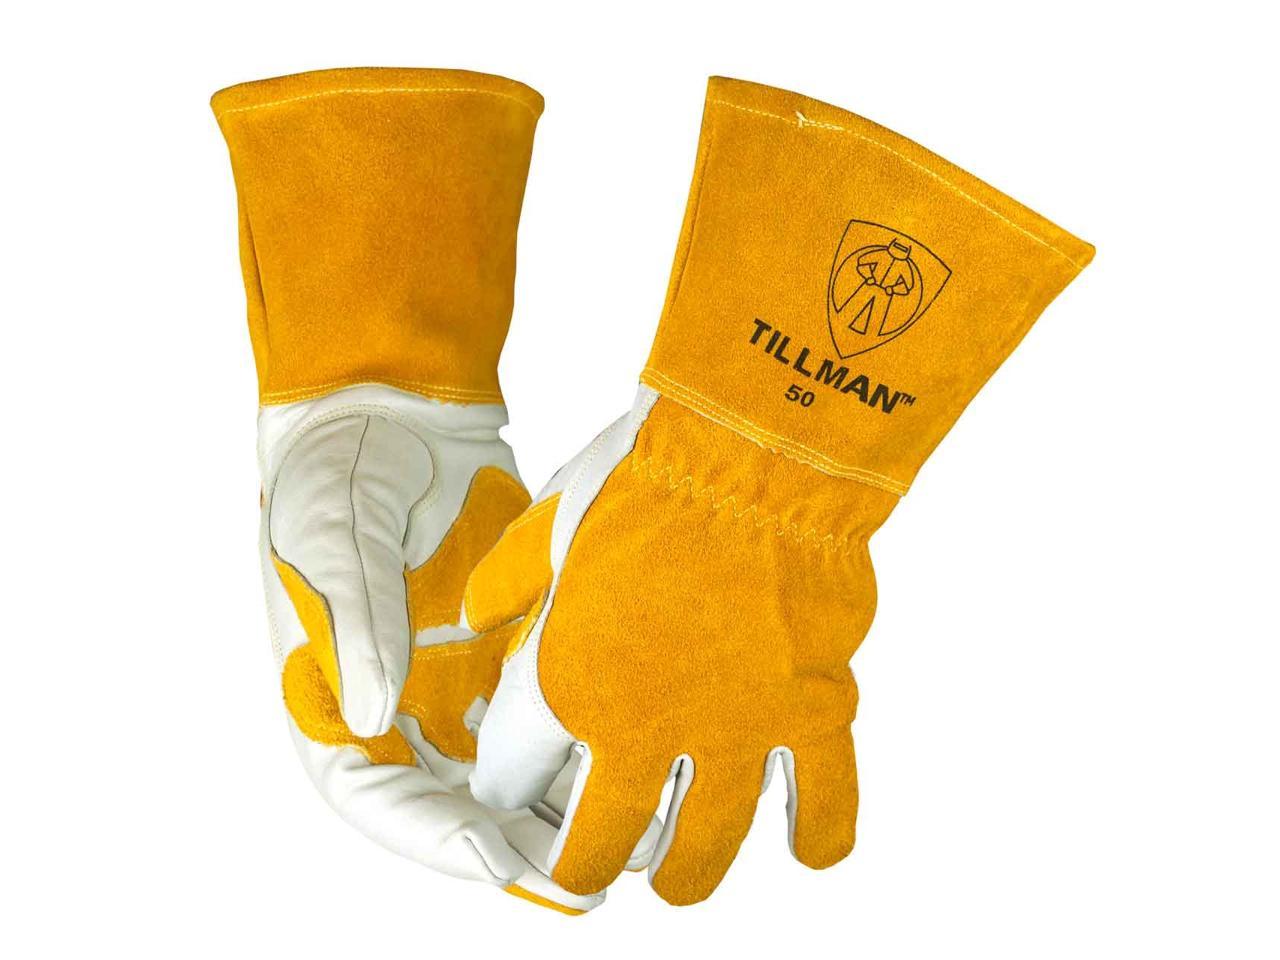 Medium for sale online Tillman 48 Top Grain Goatskin Cowhide Fleece Lined MIG Welding Gloves 